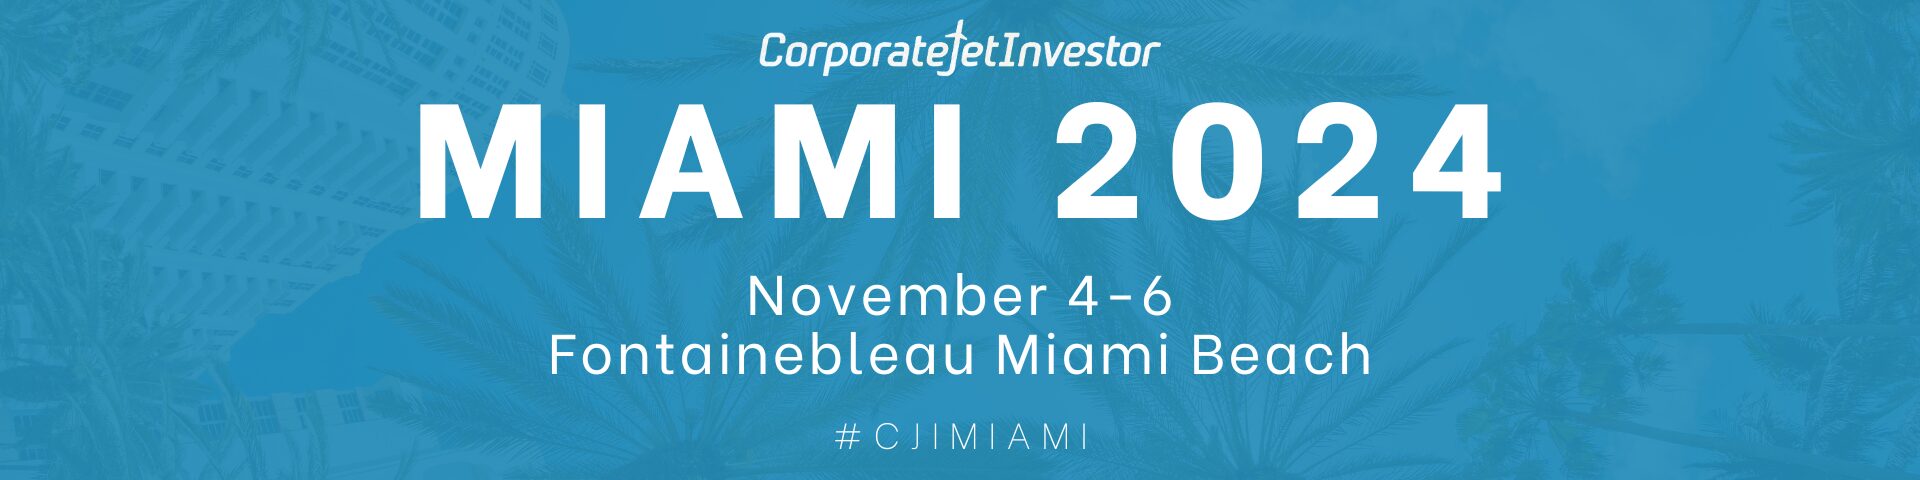 Corporate Jet Investor Miami 2024